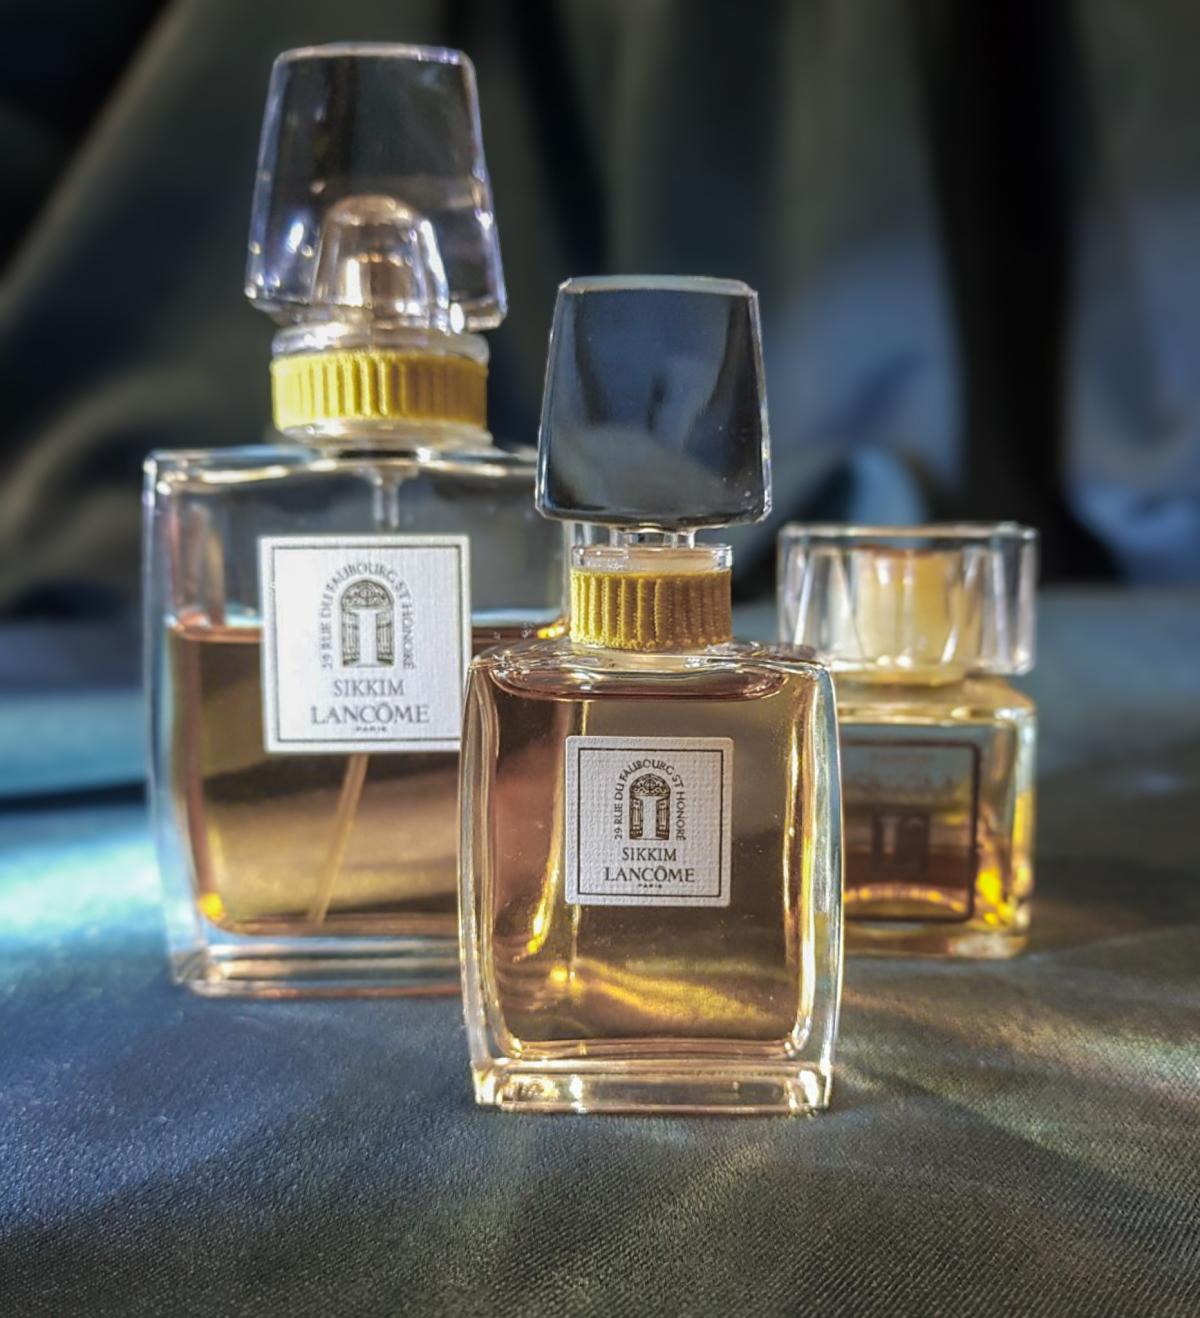 Sikkim Lancôme perfume - a fragrance for women 1971